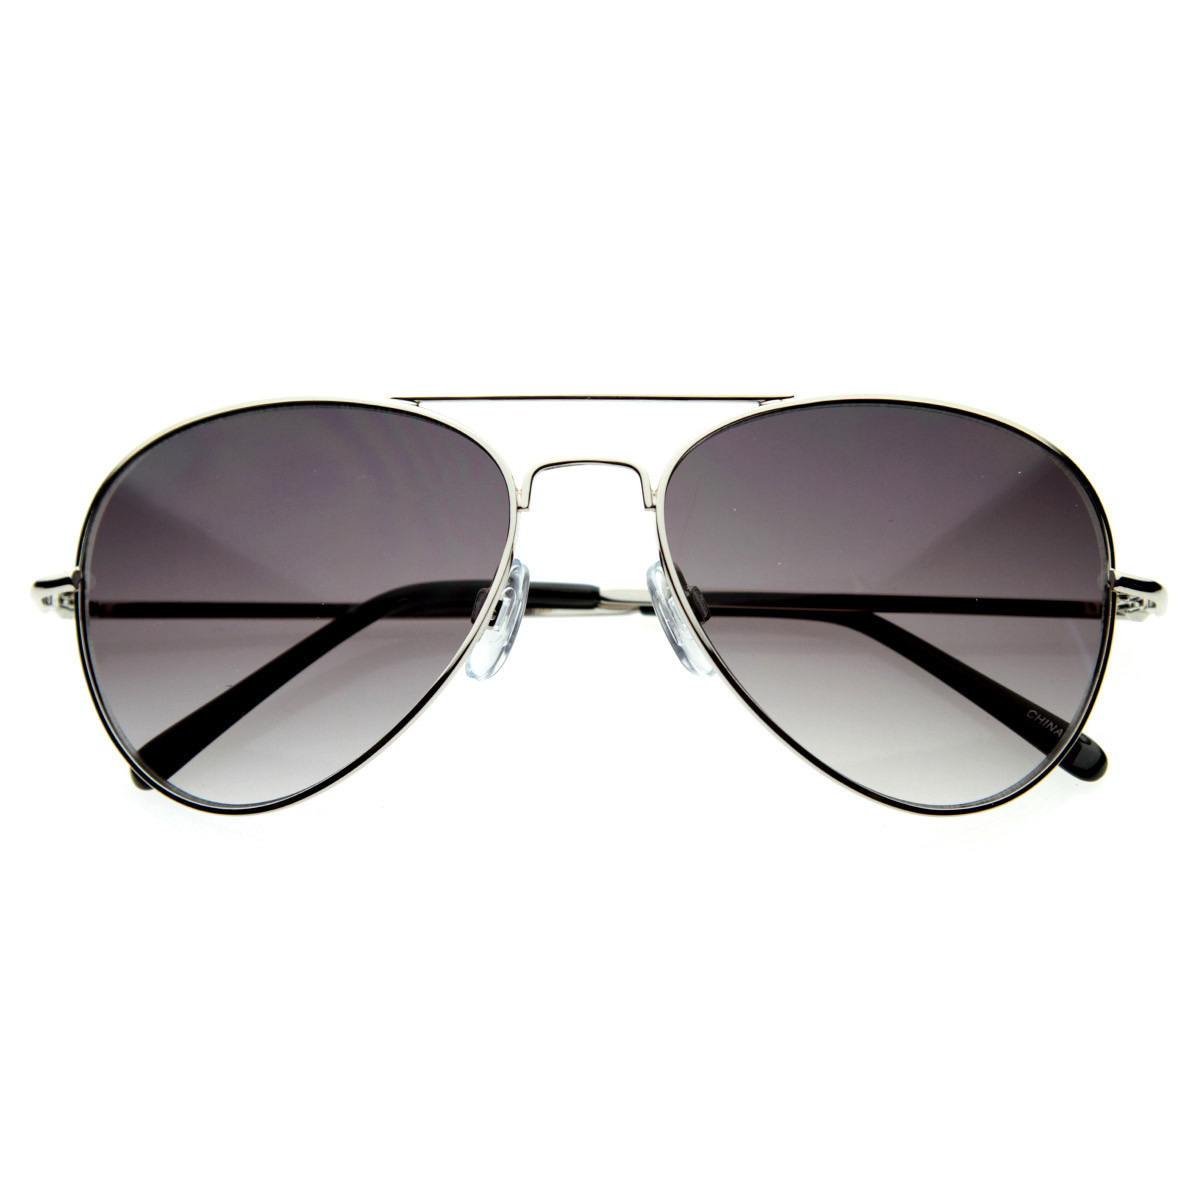 Small Classic Aviator Sunglasses 50mm Aviators - 1372 - Silver